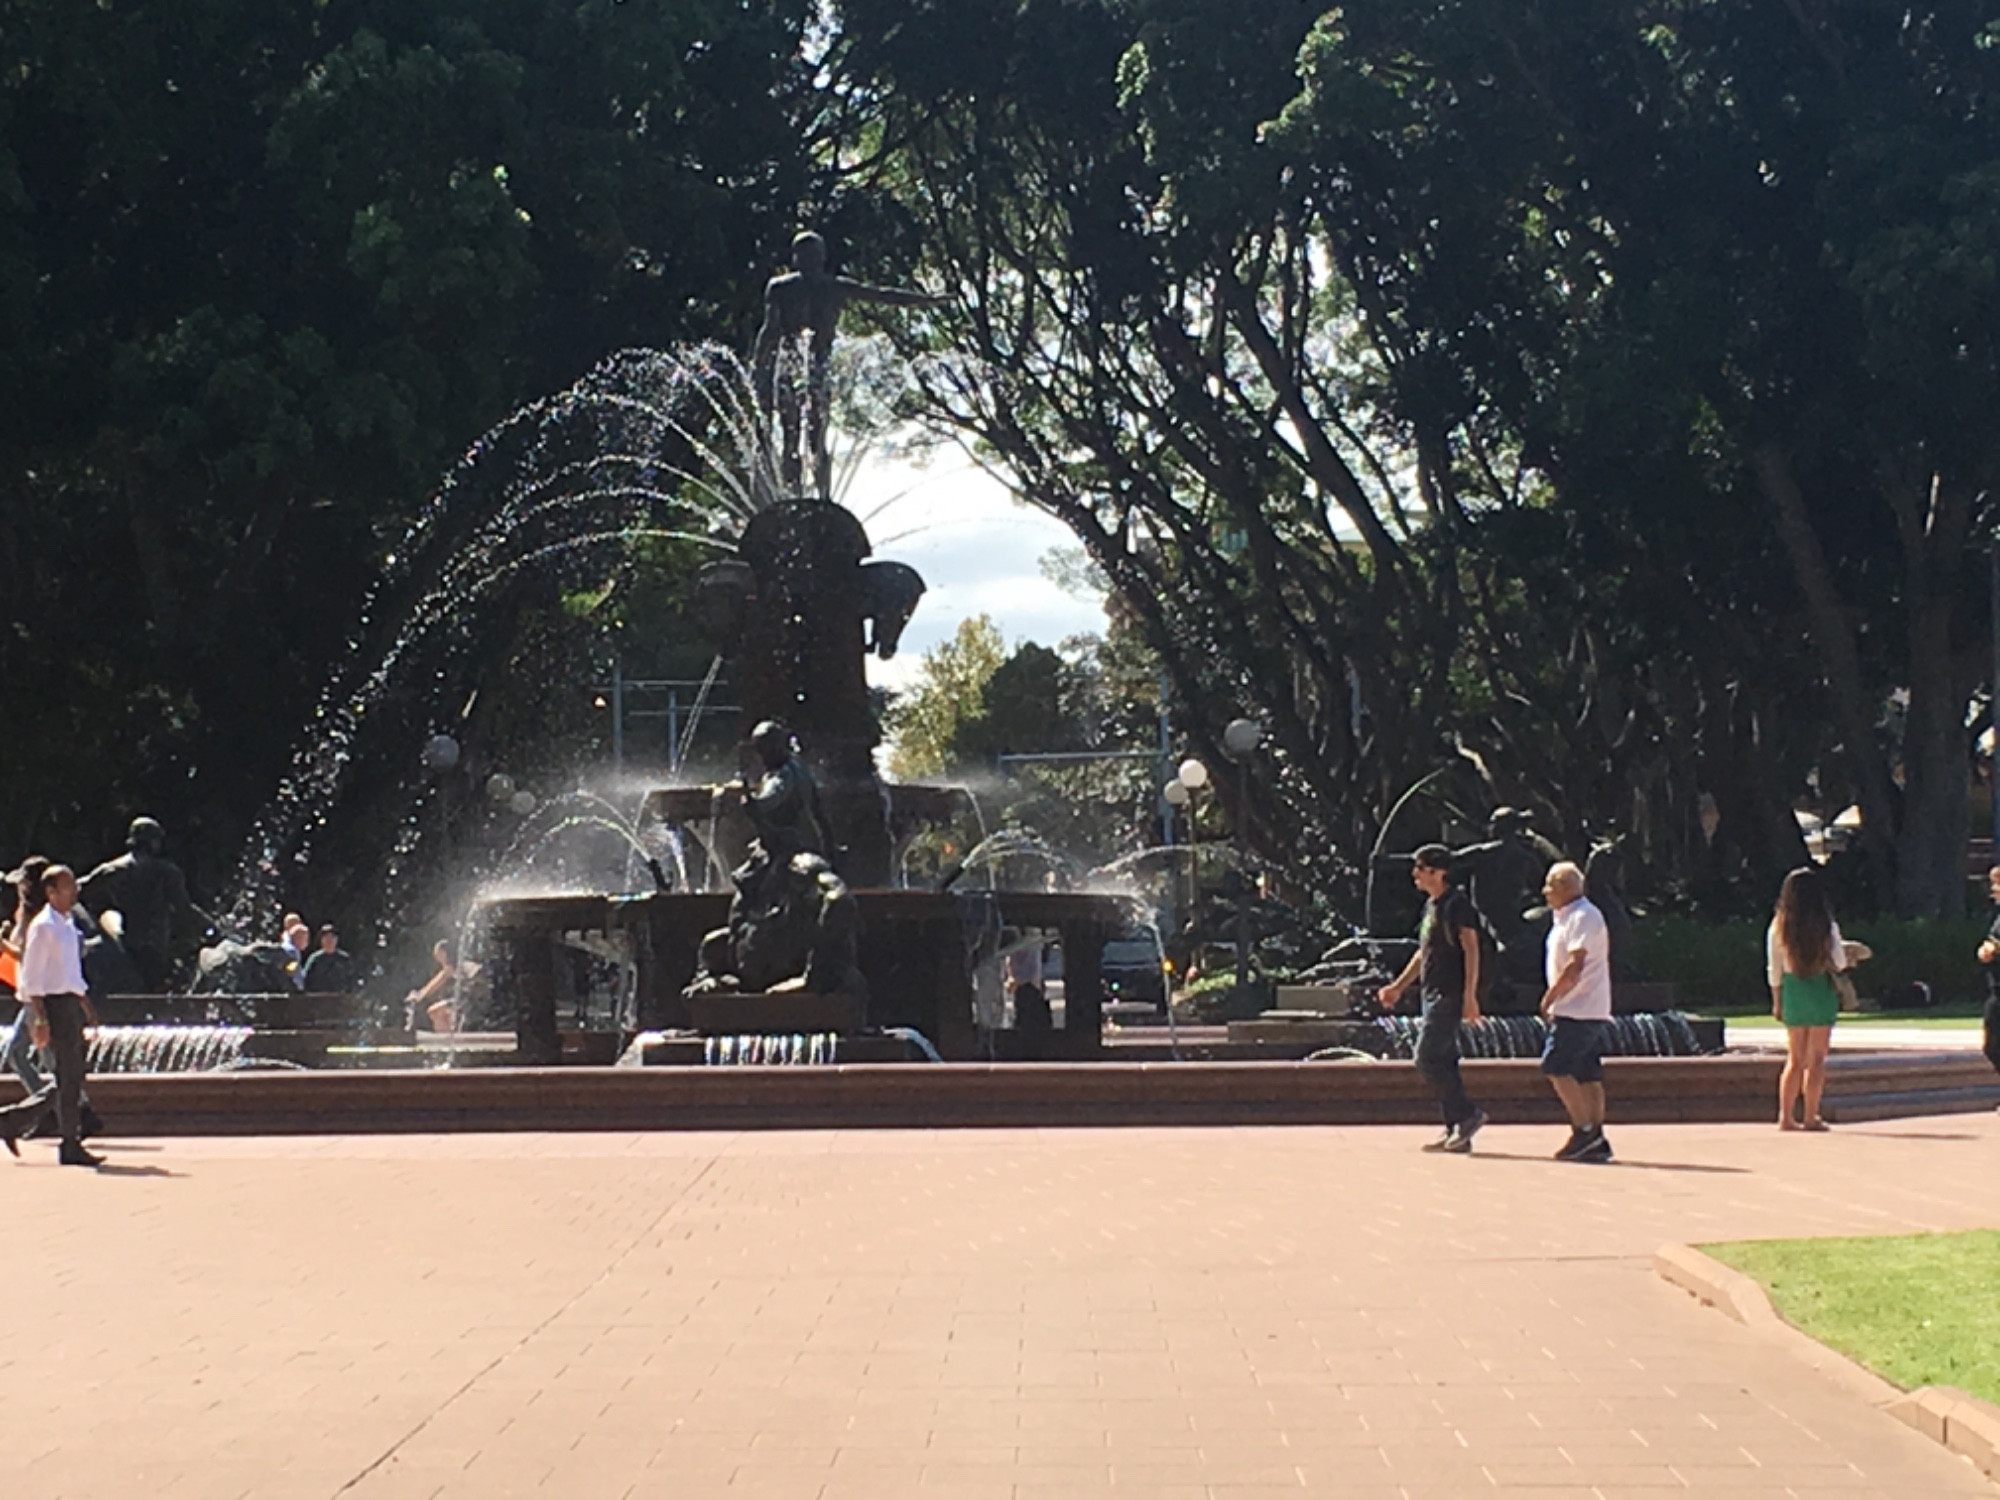 Archibald memorial fountain, Австралия